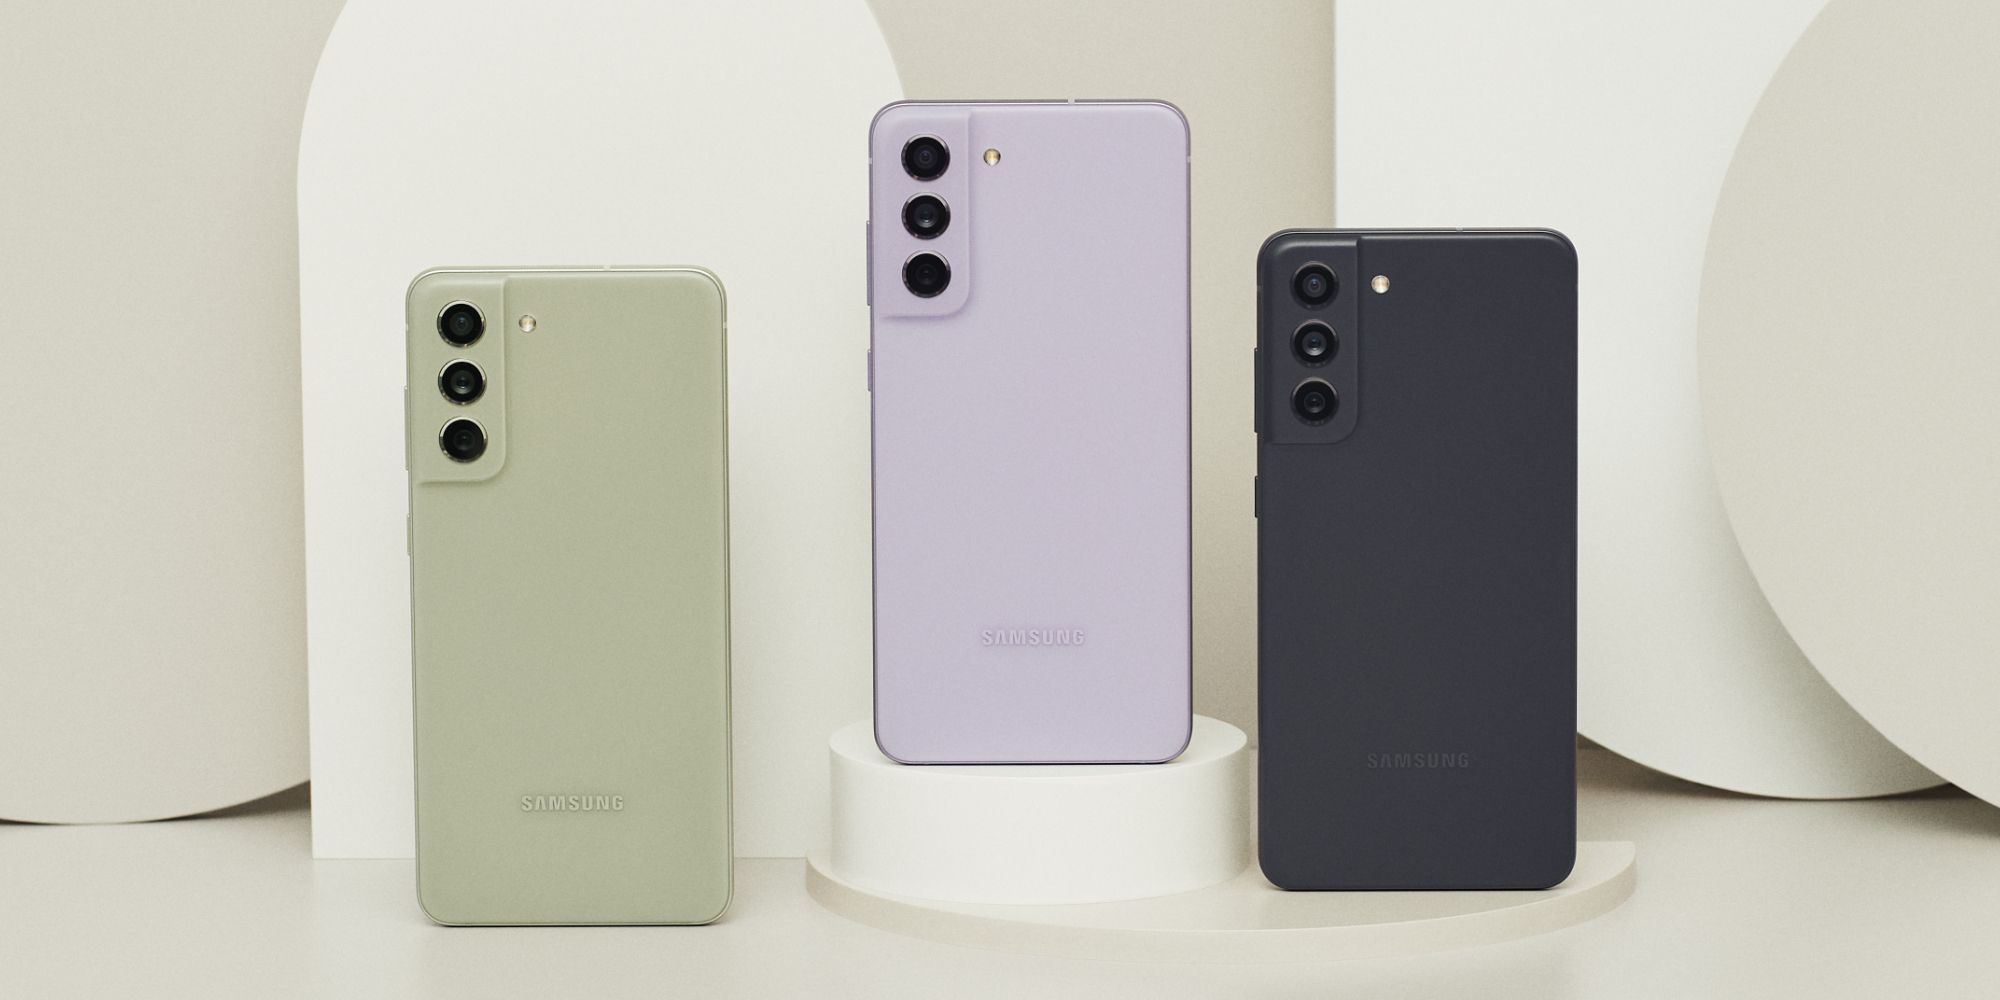 Samsung Galaxy S21 FE in three colors